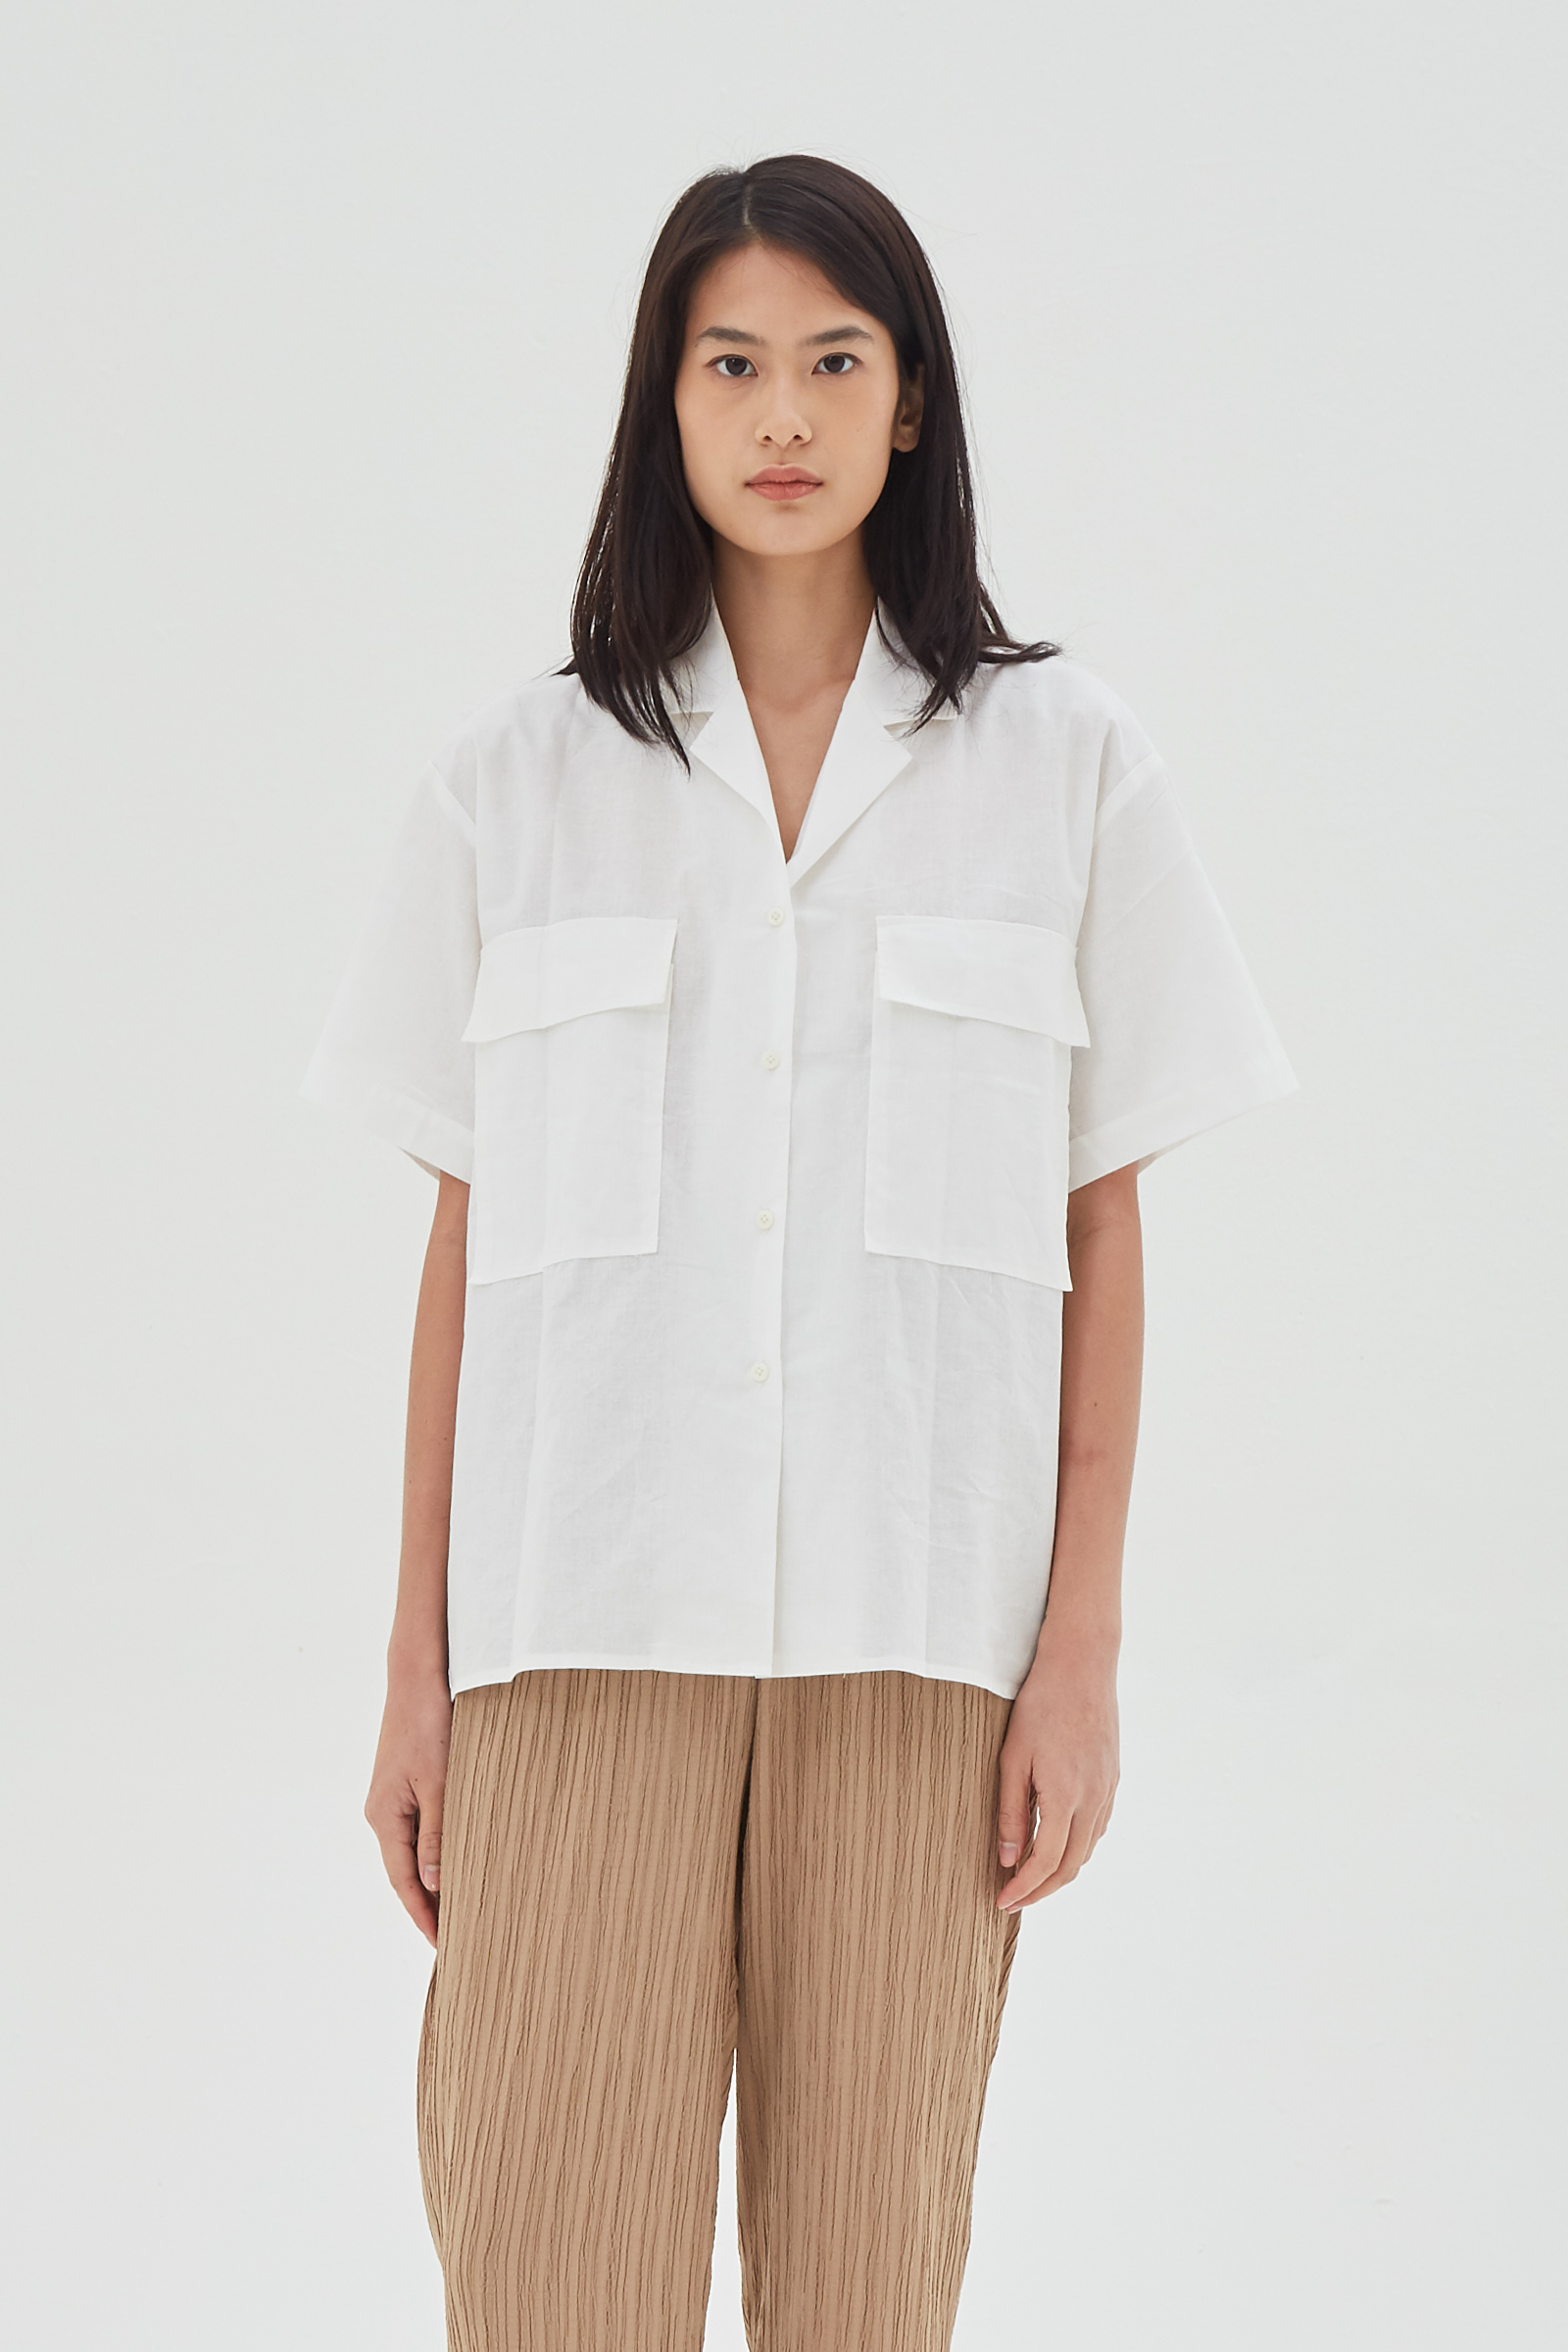 Compact Shirt White : shop at velvet